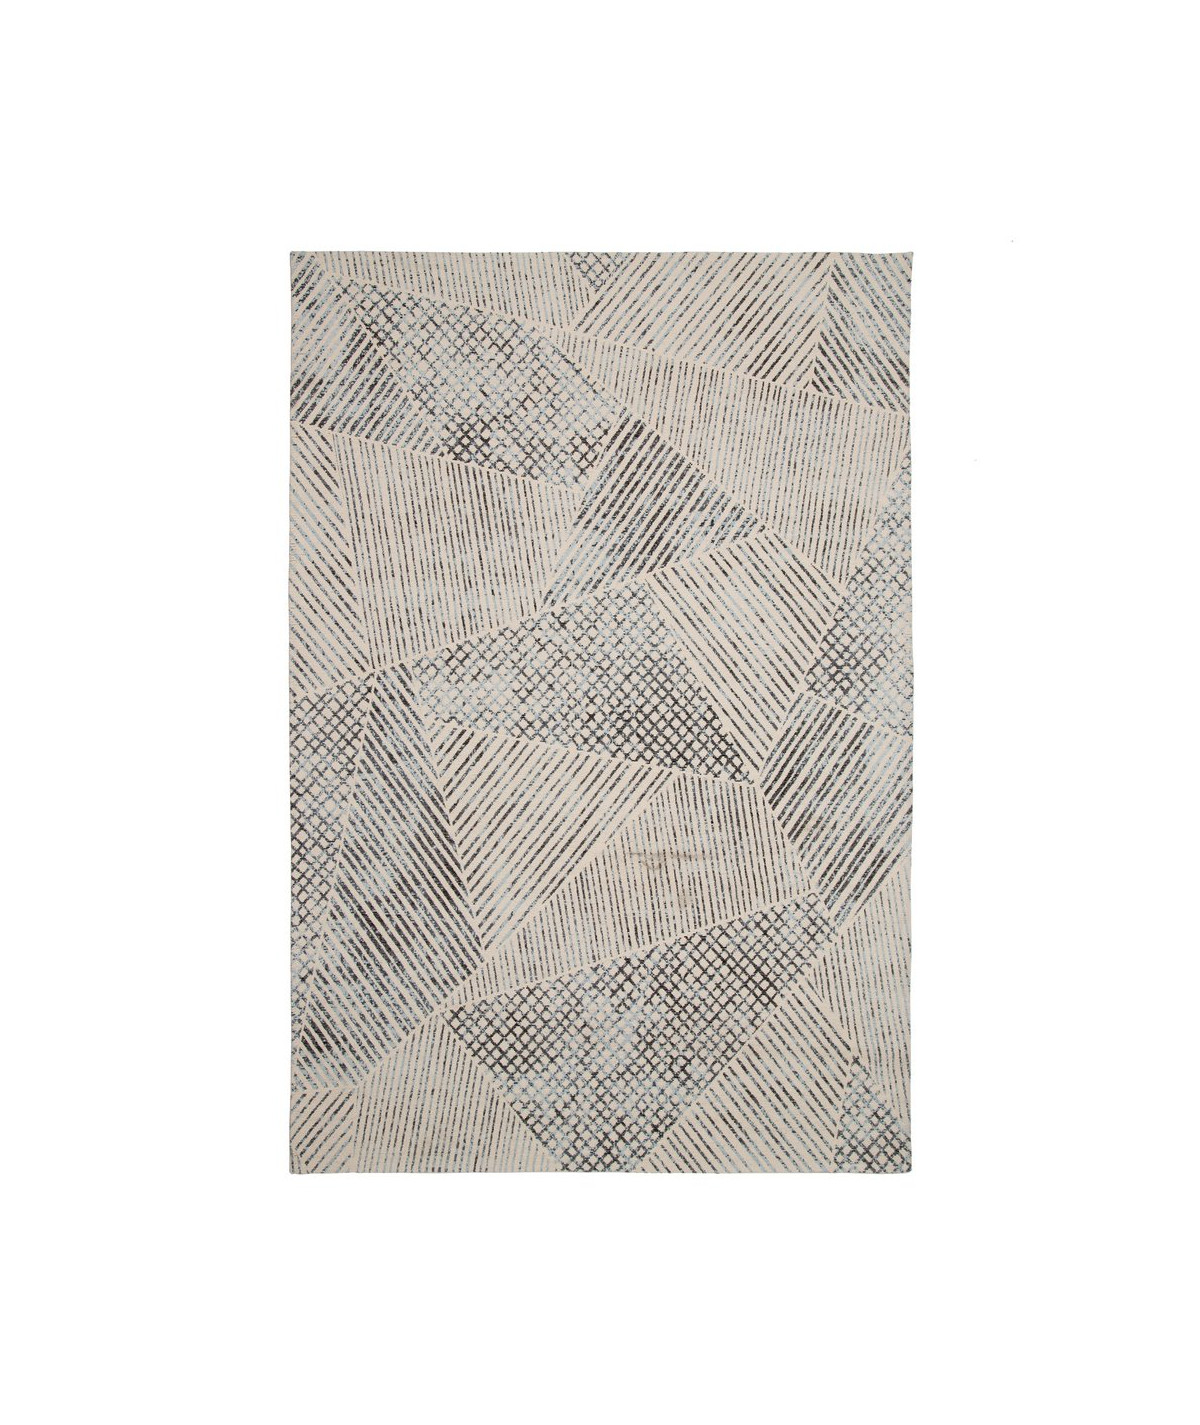 Tapis beige coton polyester 160x230cm - Tabriz |YESDEKO